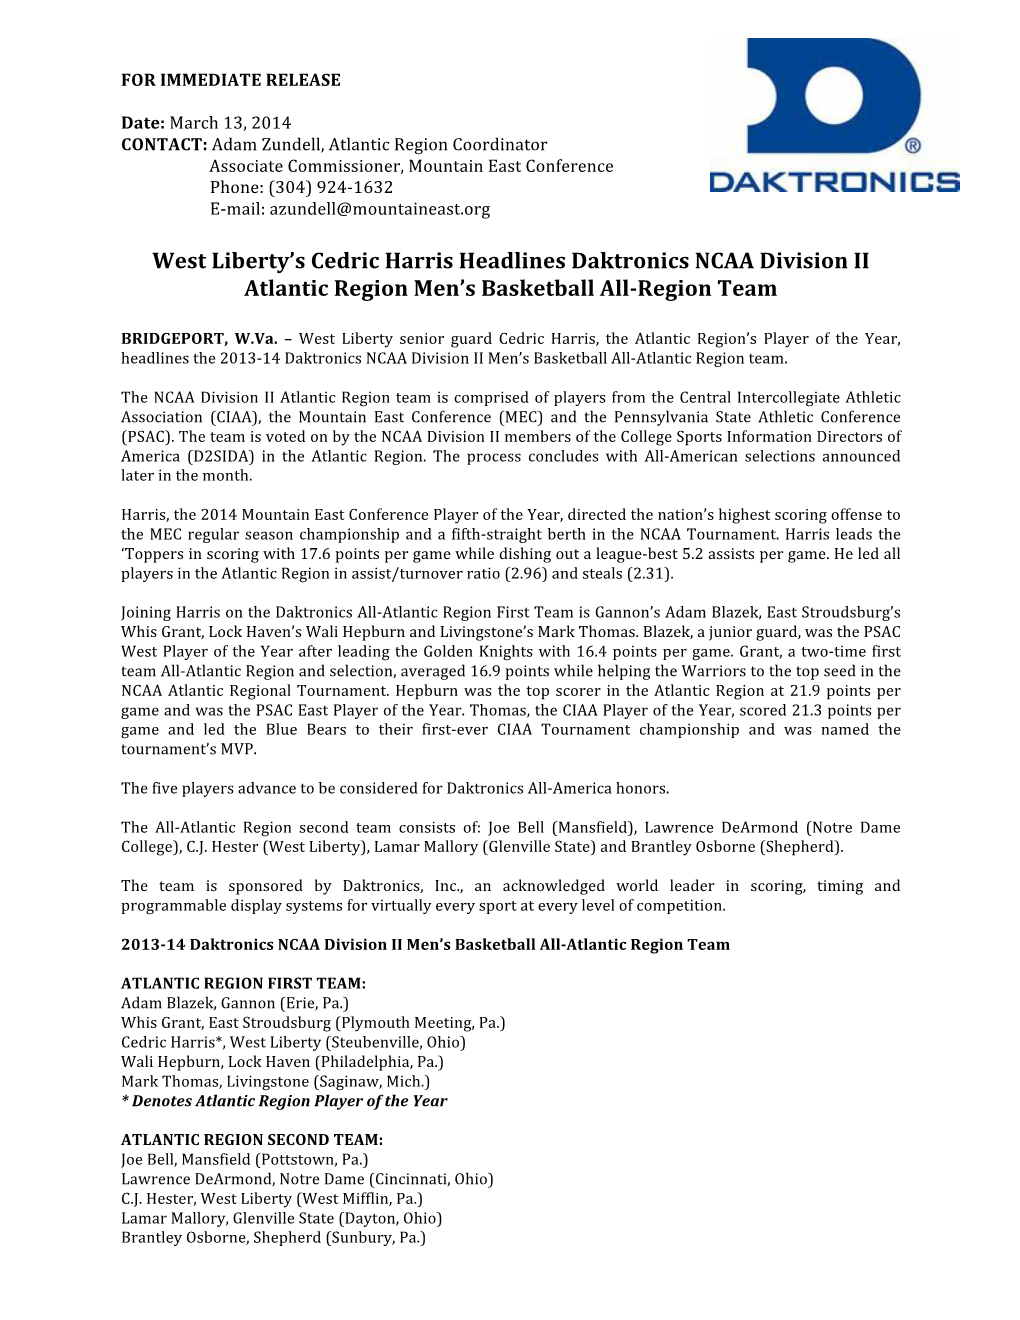 West Liberty's Cedric Harris Headlines Daktronics NCAA Division II